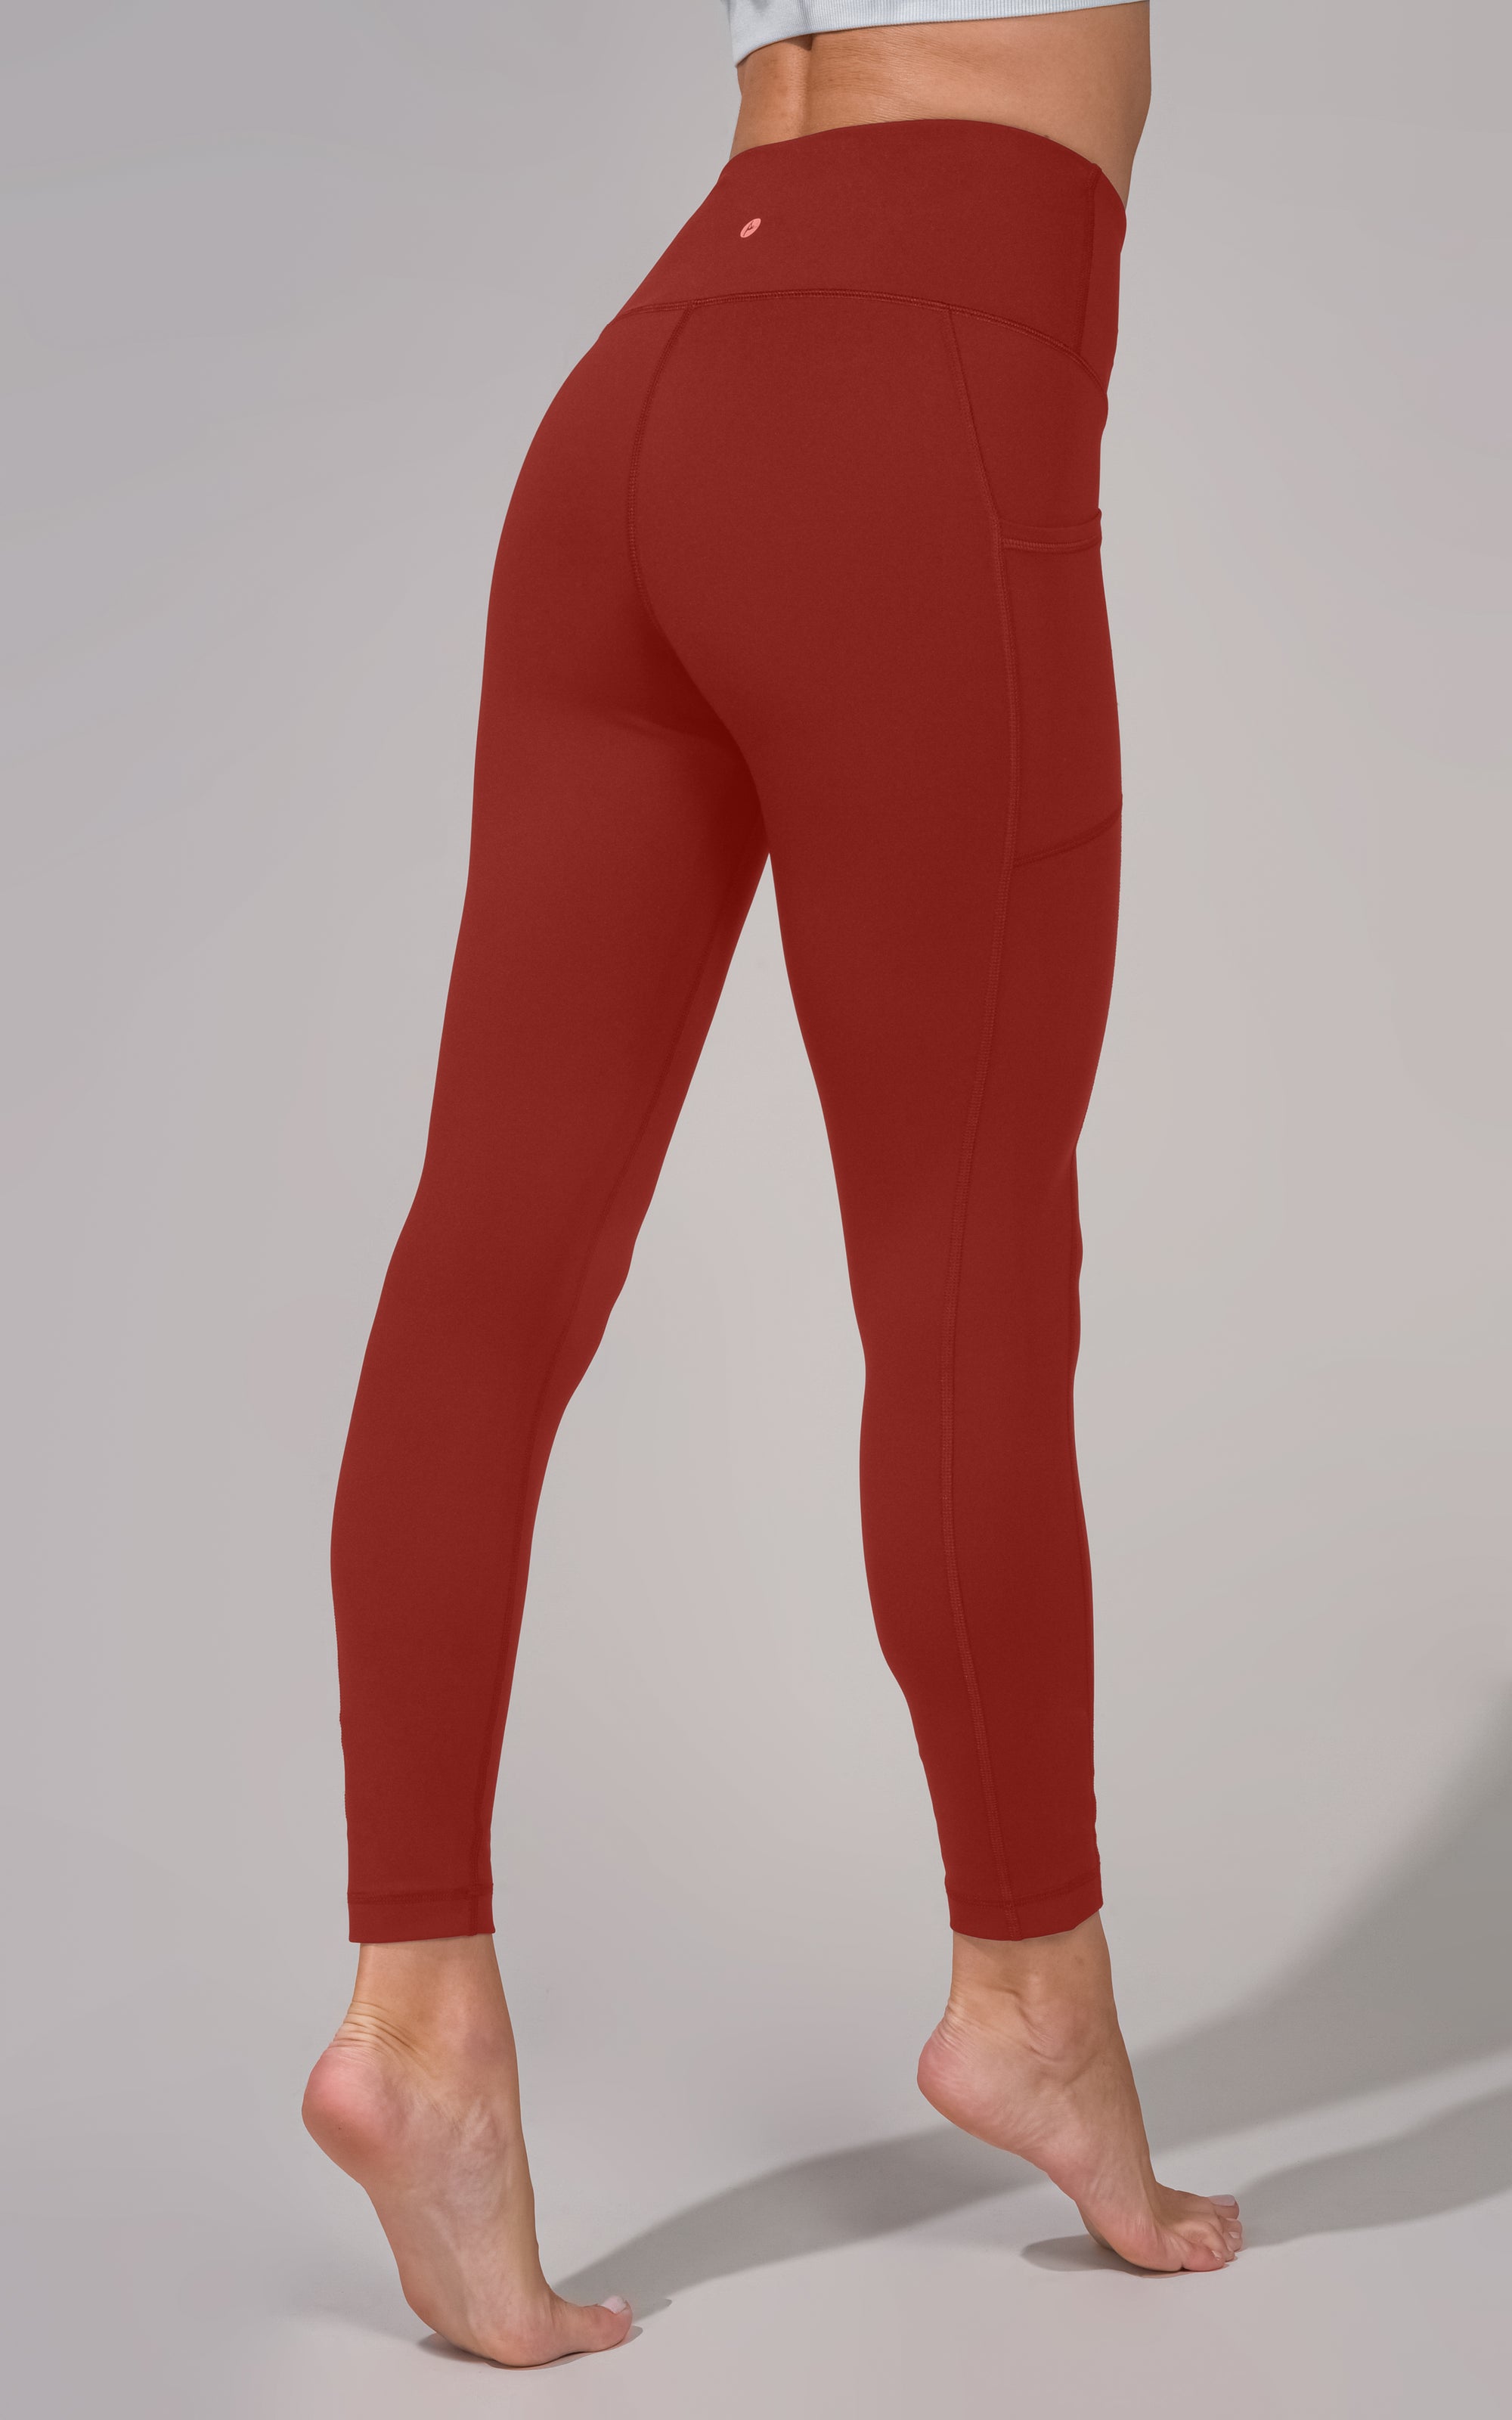 SCDZS Red Thread Pocket Black Jeans Leggings Women High Waist